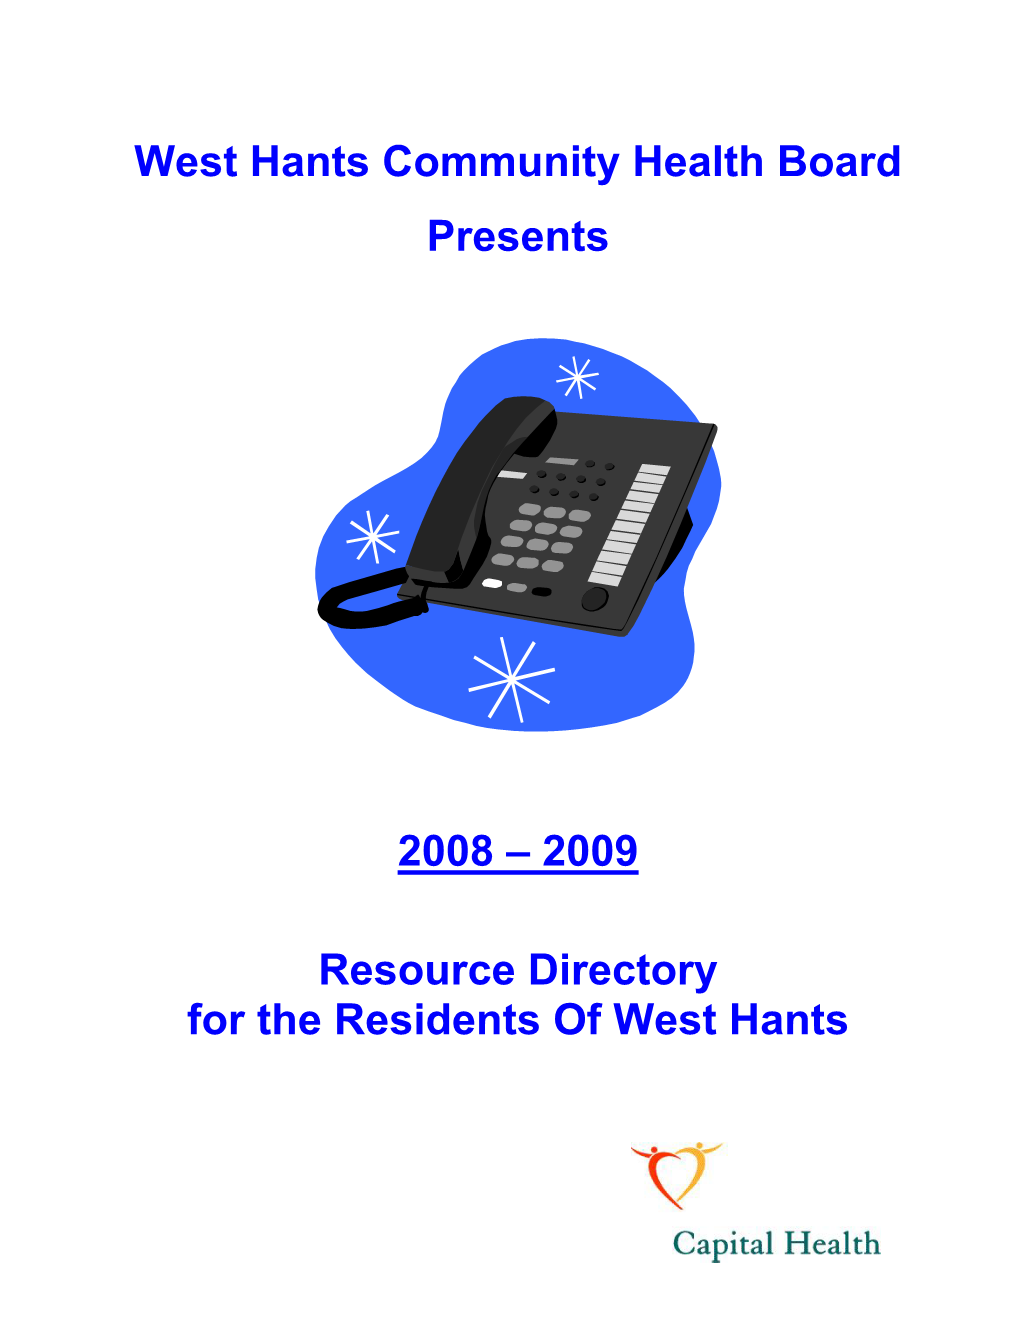 West Hants Community Health Board Presents